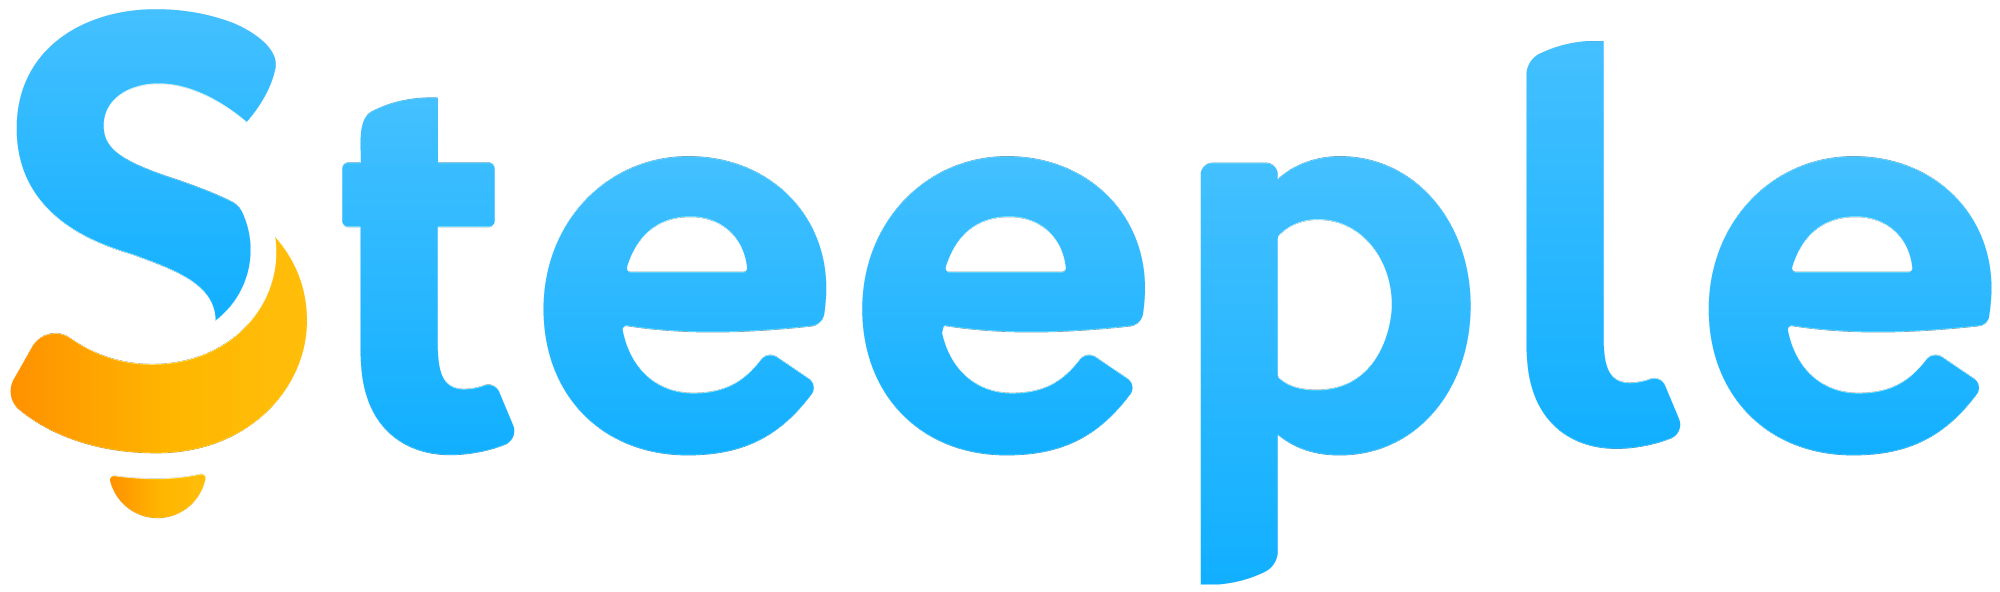 logo steeple